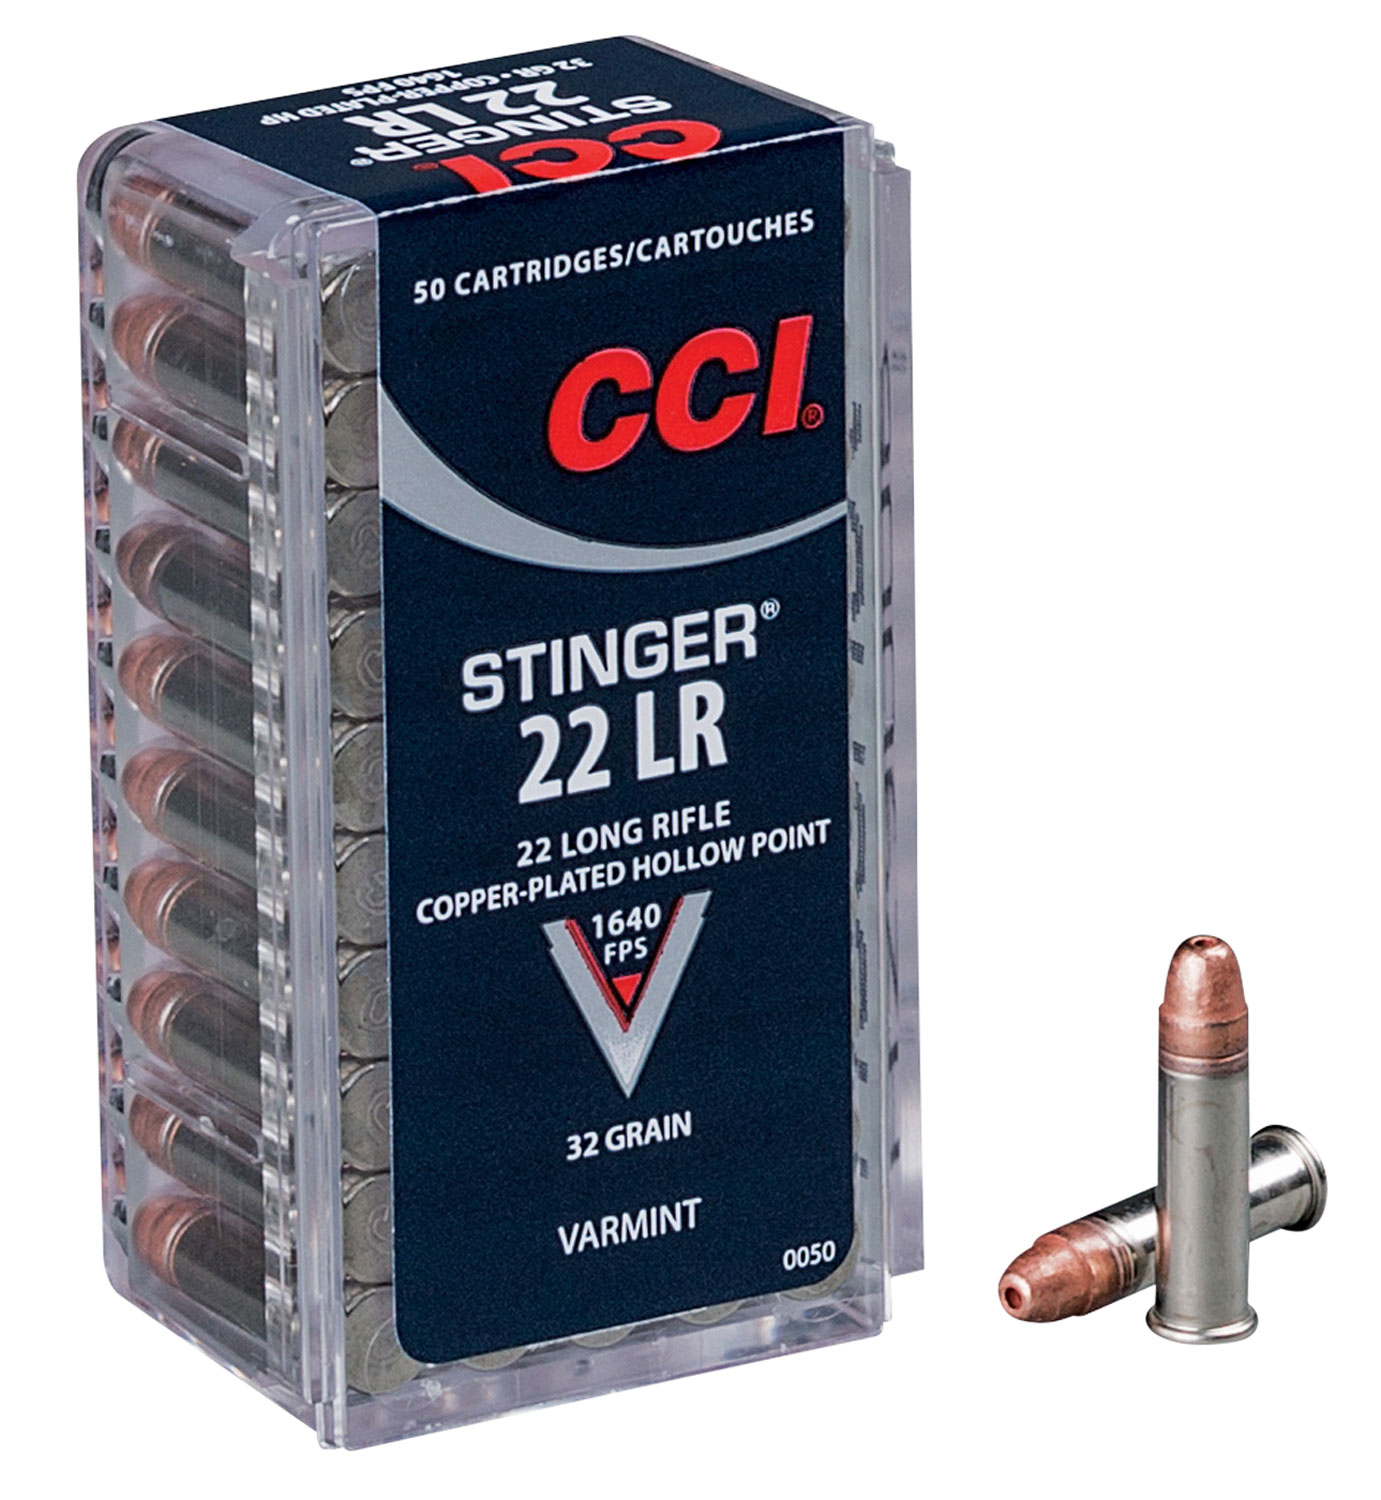 CCI 0050 Varmint Stinger 22 LR 32 gr Copper Plated Hollow Point (CPHP) 50 Box